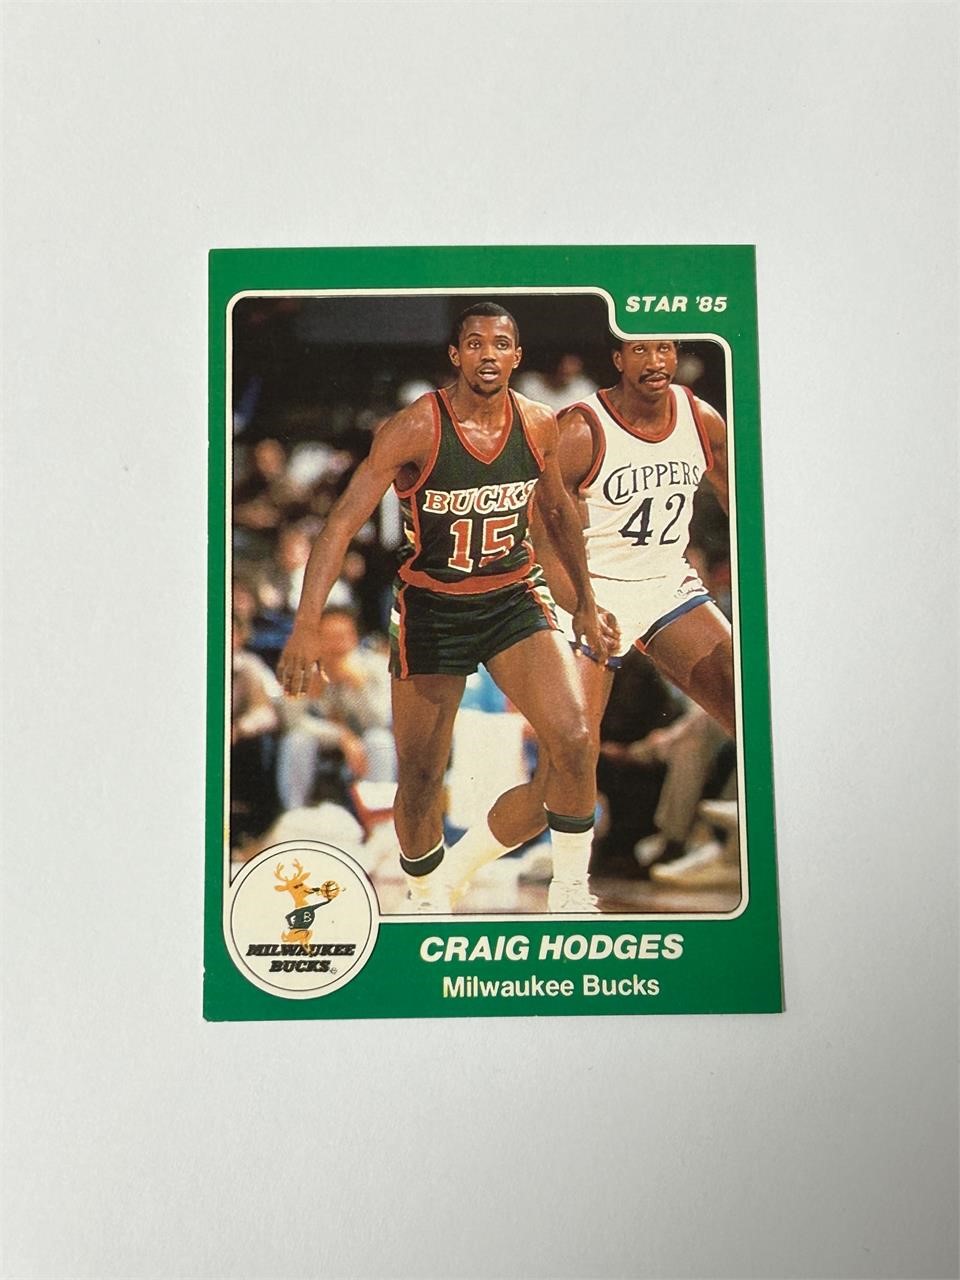 1984 Star Craig Hodges RC Bucks Card Night